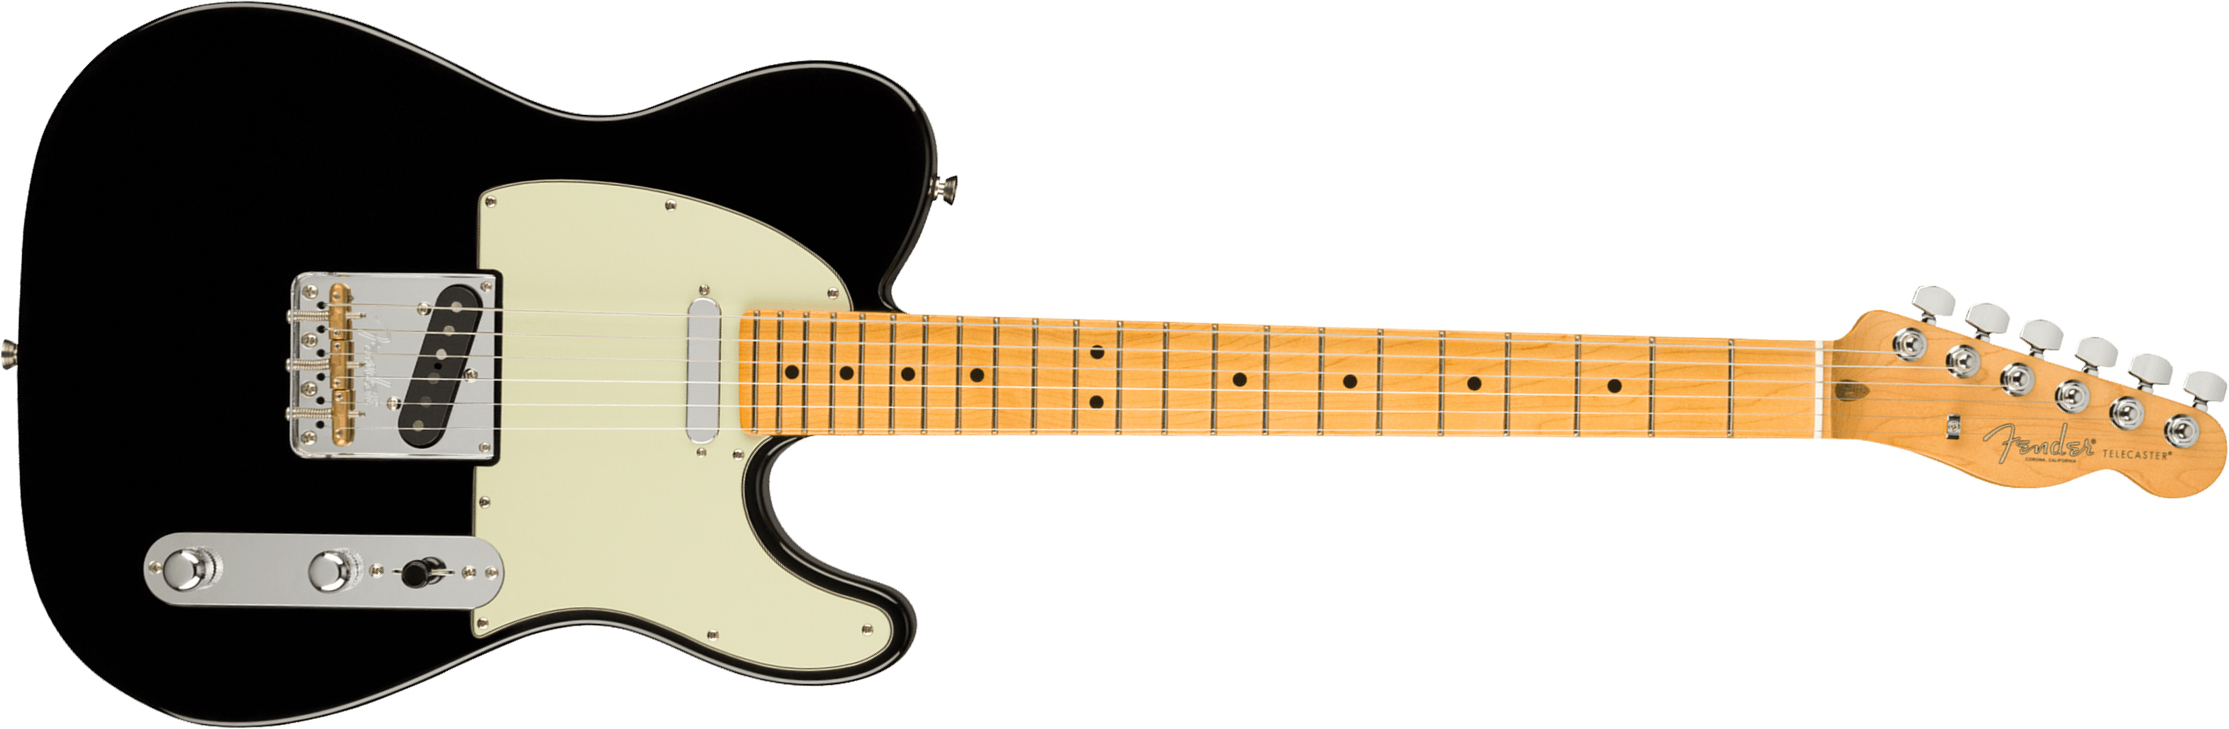 Fender Tele American Professional Ii Usa Mn - Black - Tel shape electric guitar - Main picture